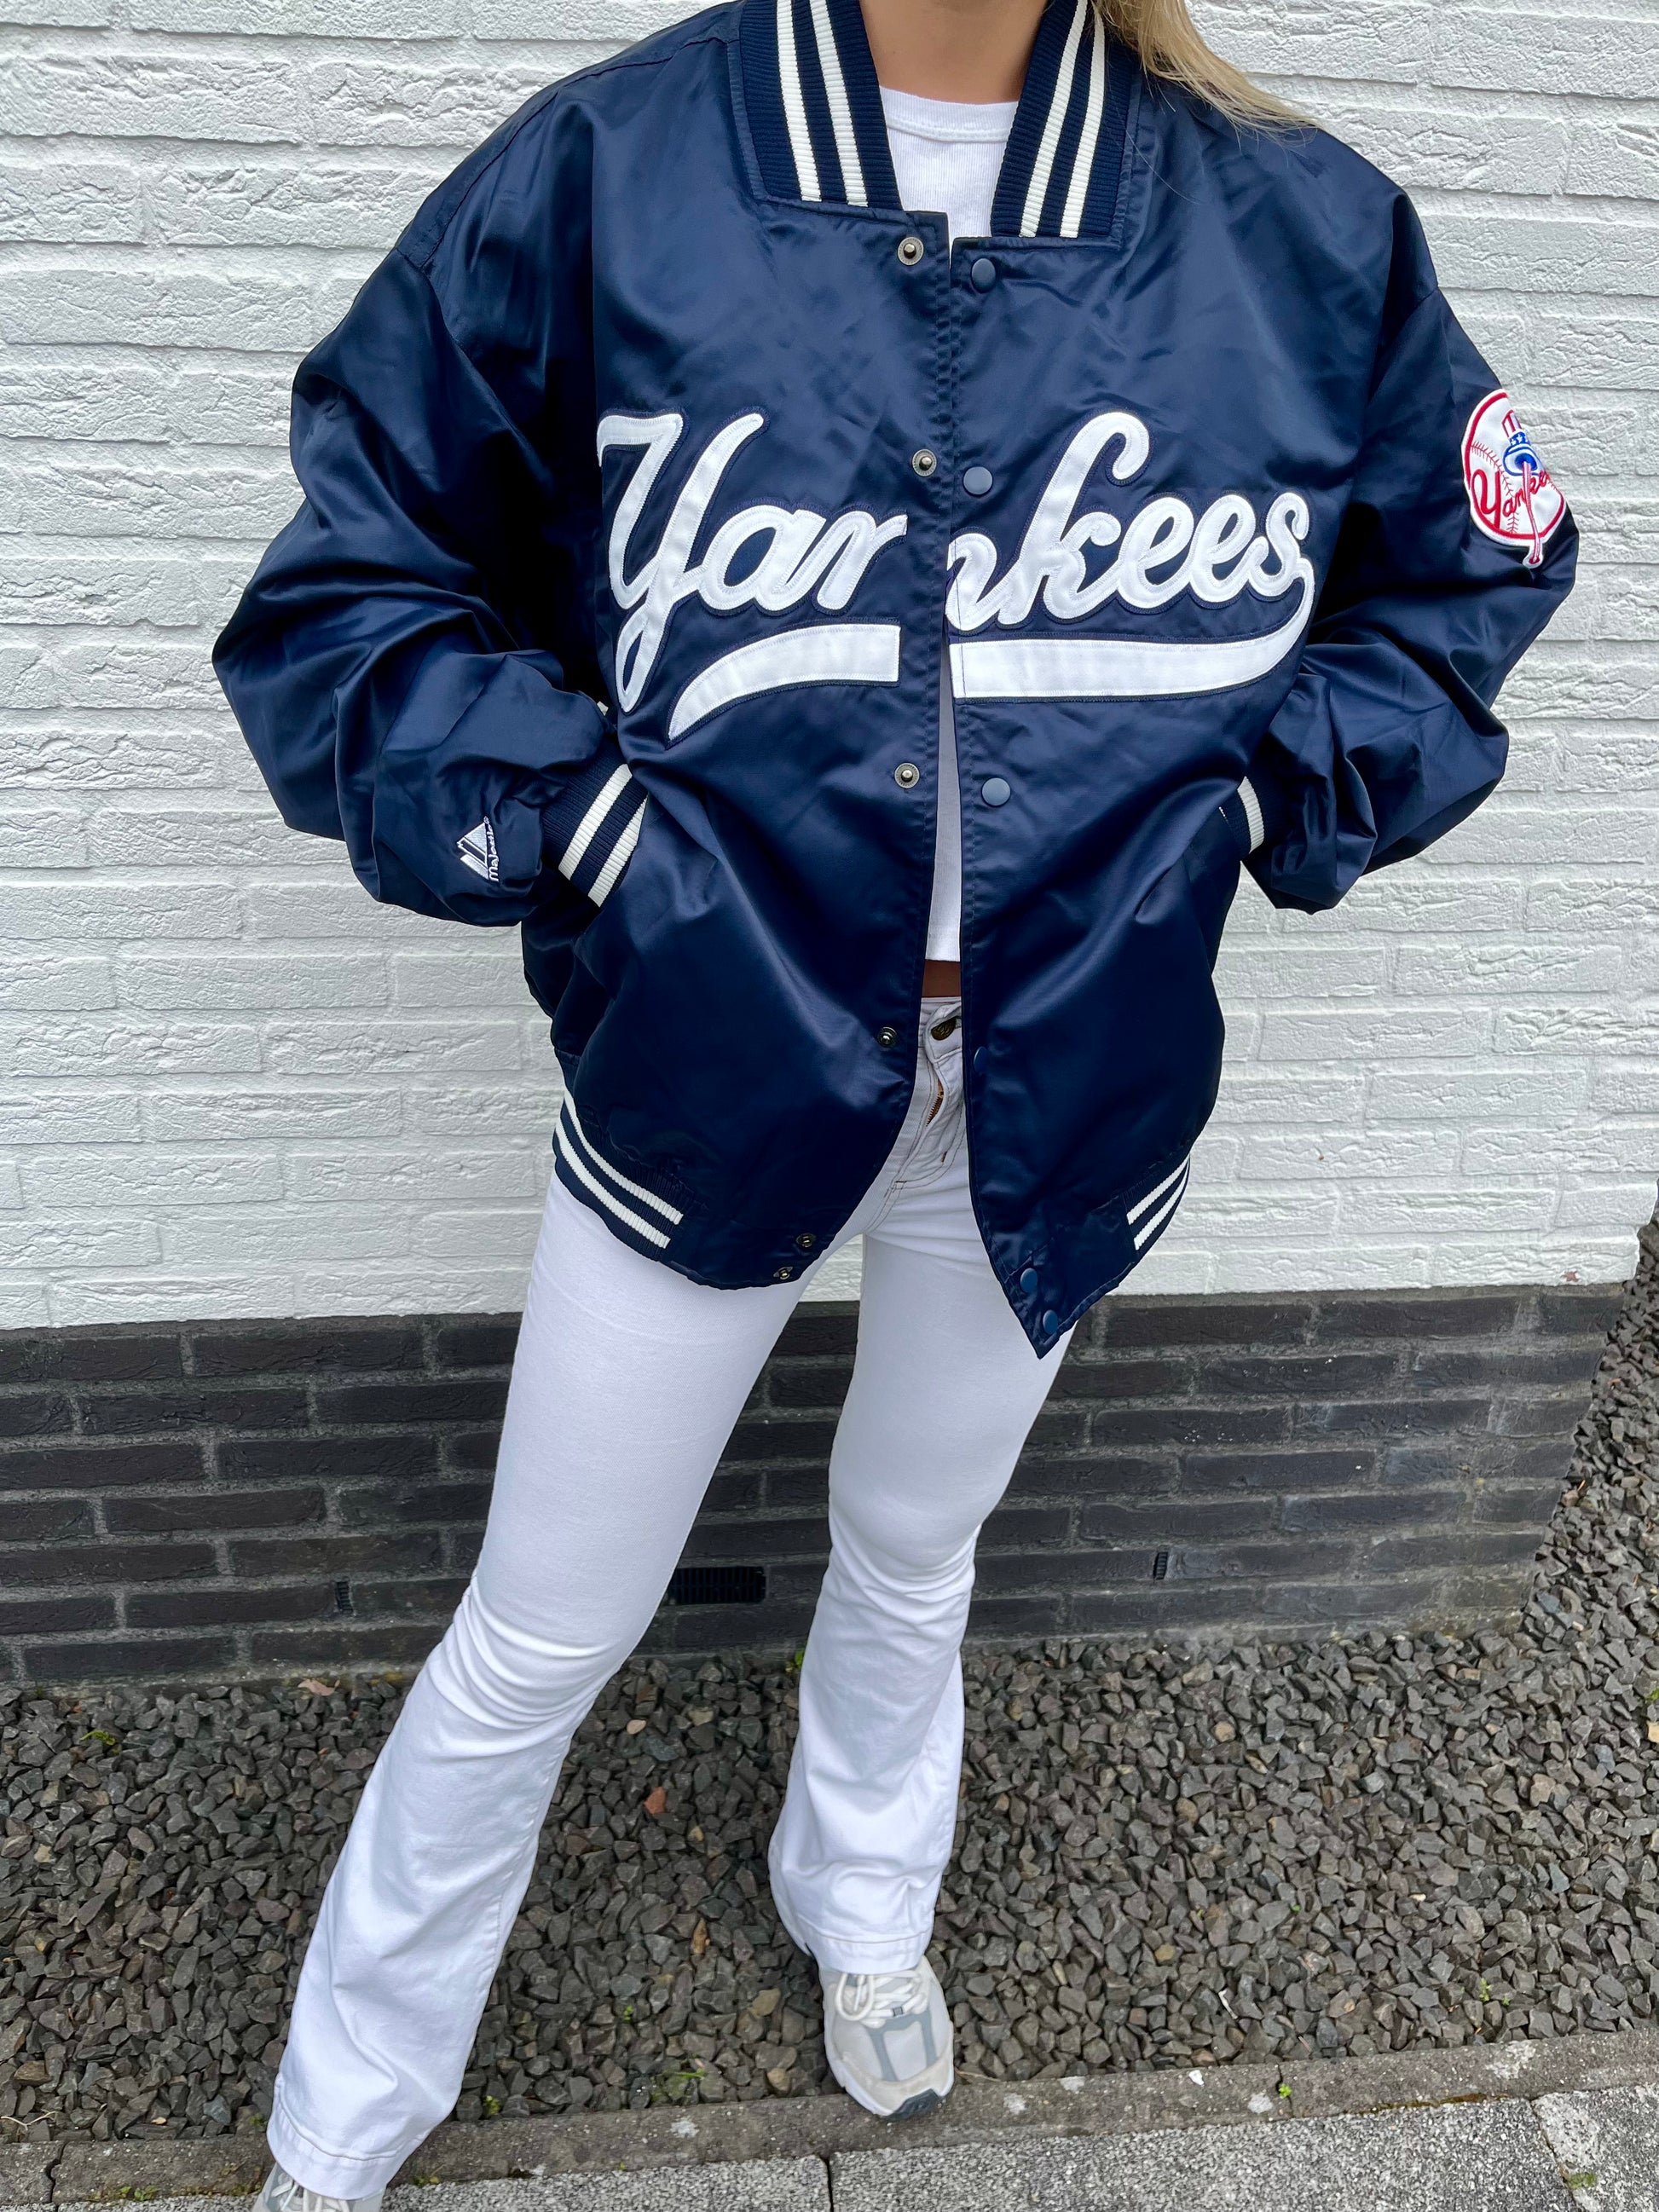 NY Yankees spell-out satin jacket